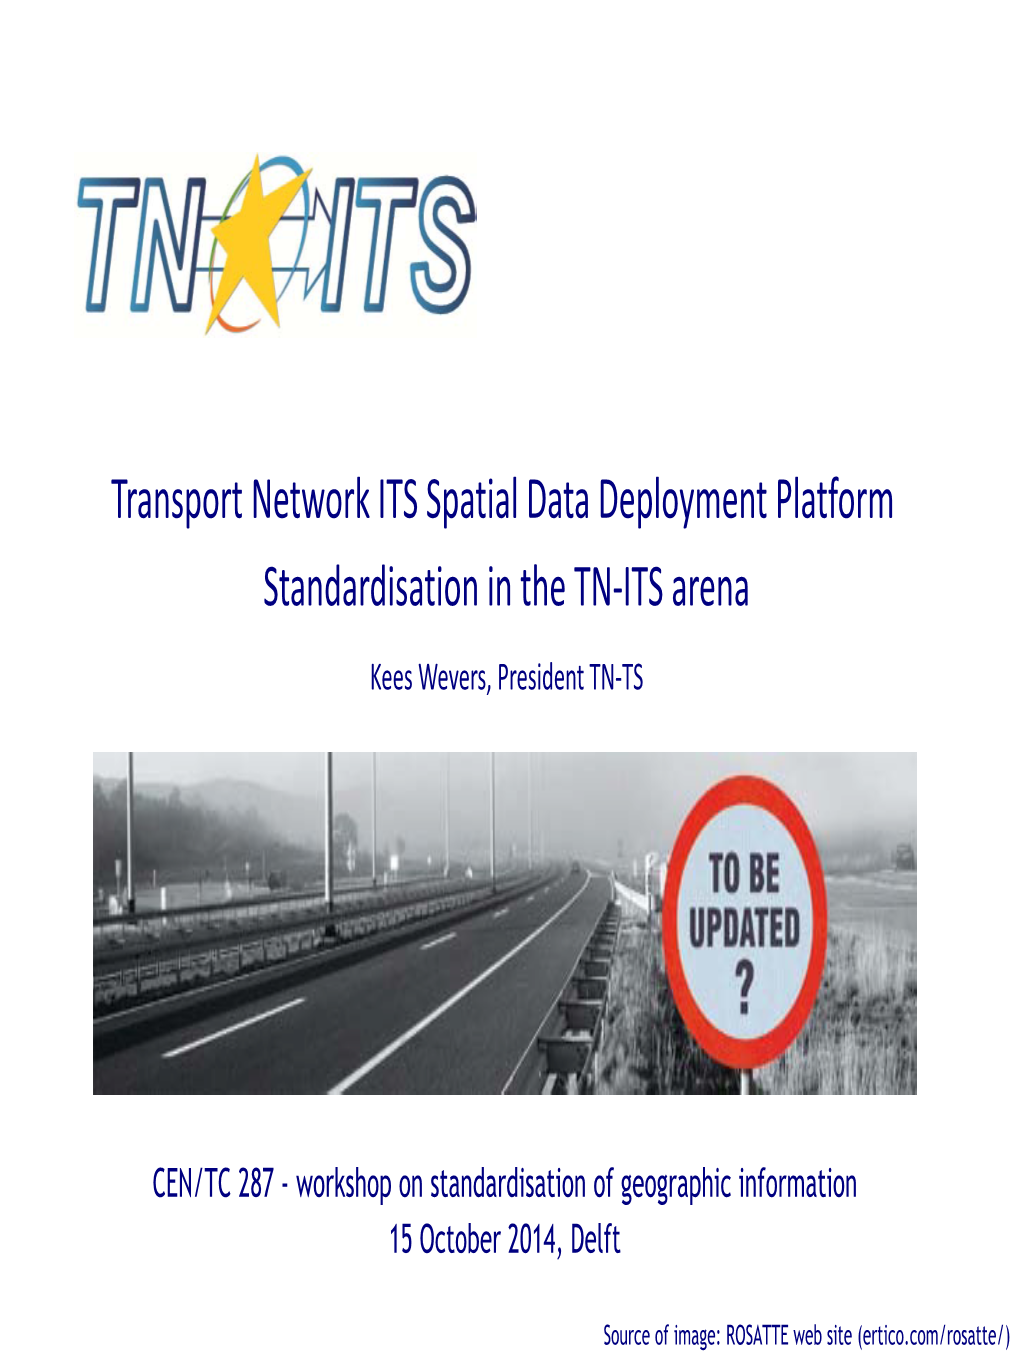 Transport Network ITS Spatial Data Deployment Platform Standardisation in the TN-ITS Arena